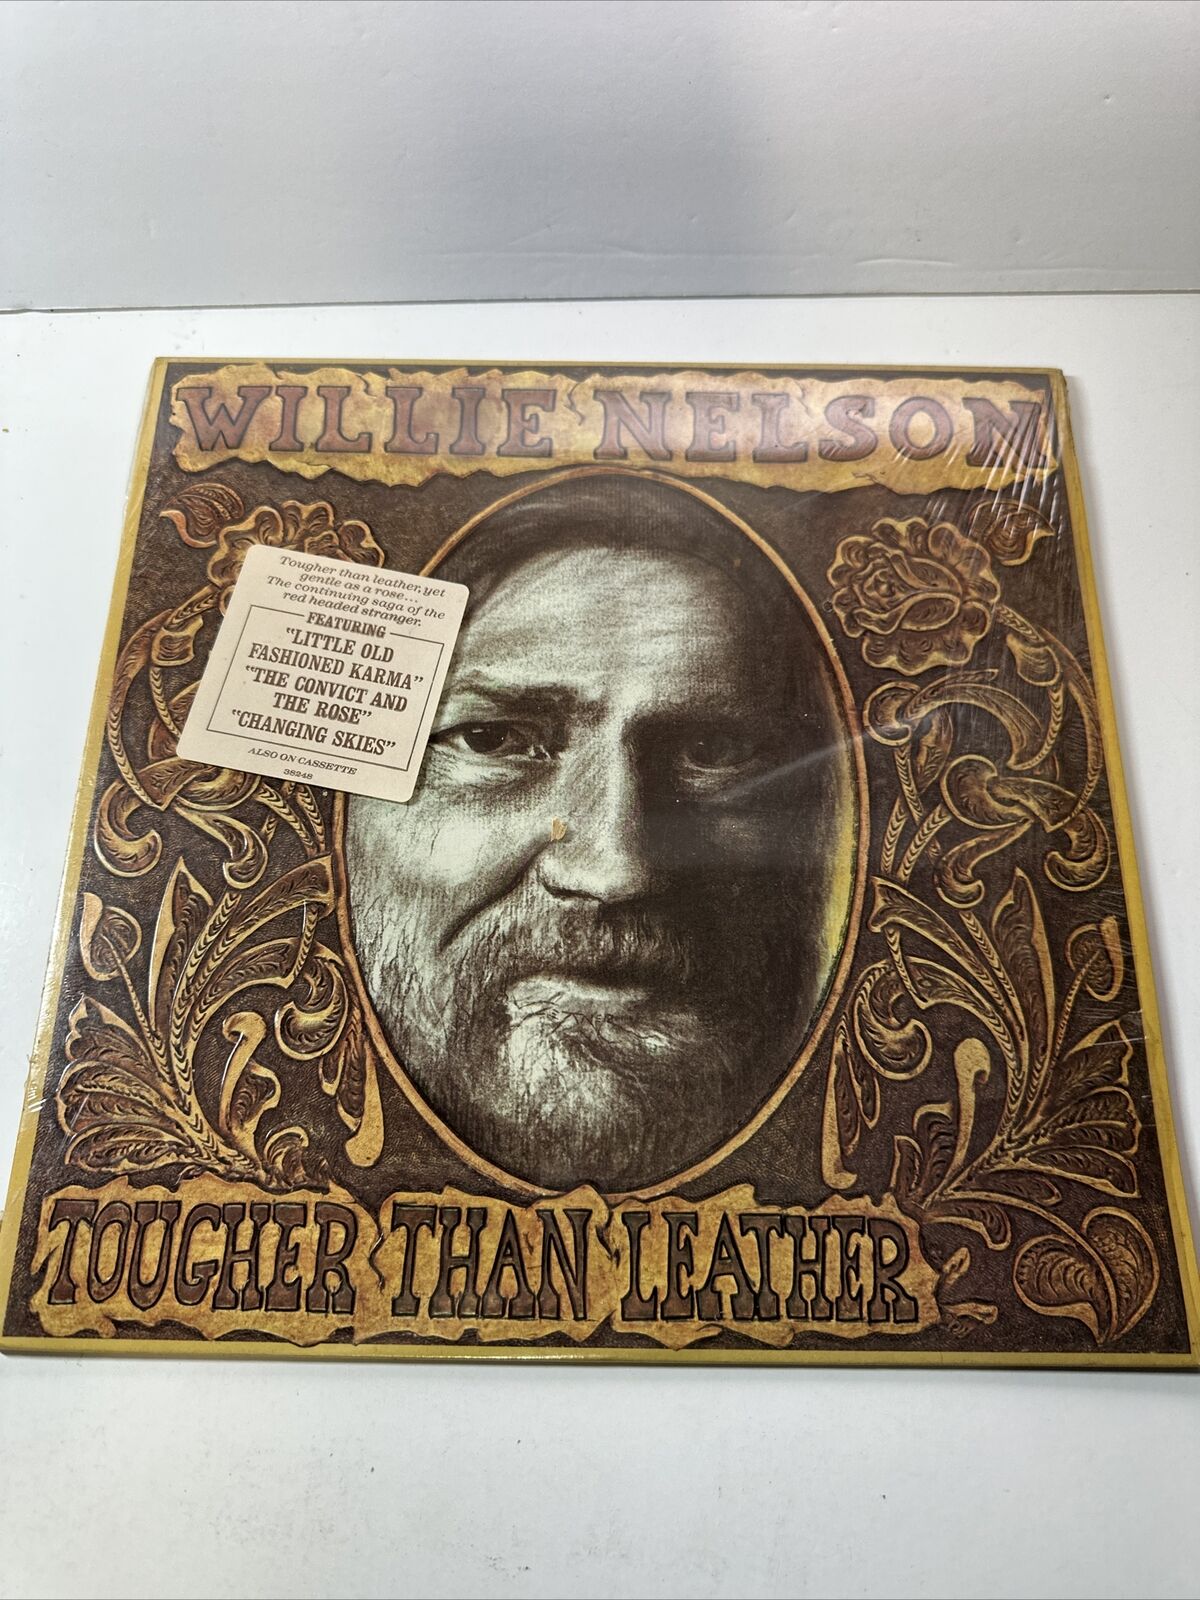 Willie Nelson Tougher than Leather Record Album Vinyl LP - QC 38248 Shrink